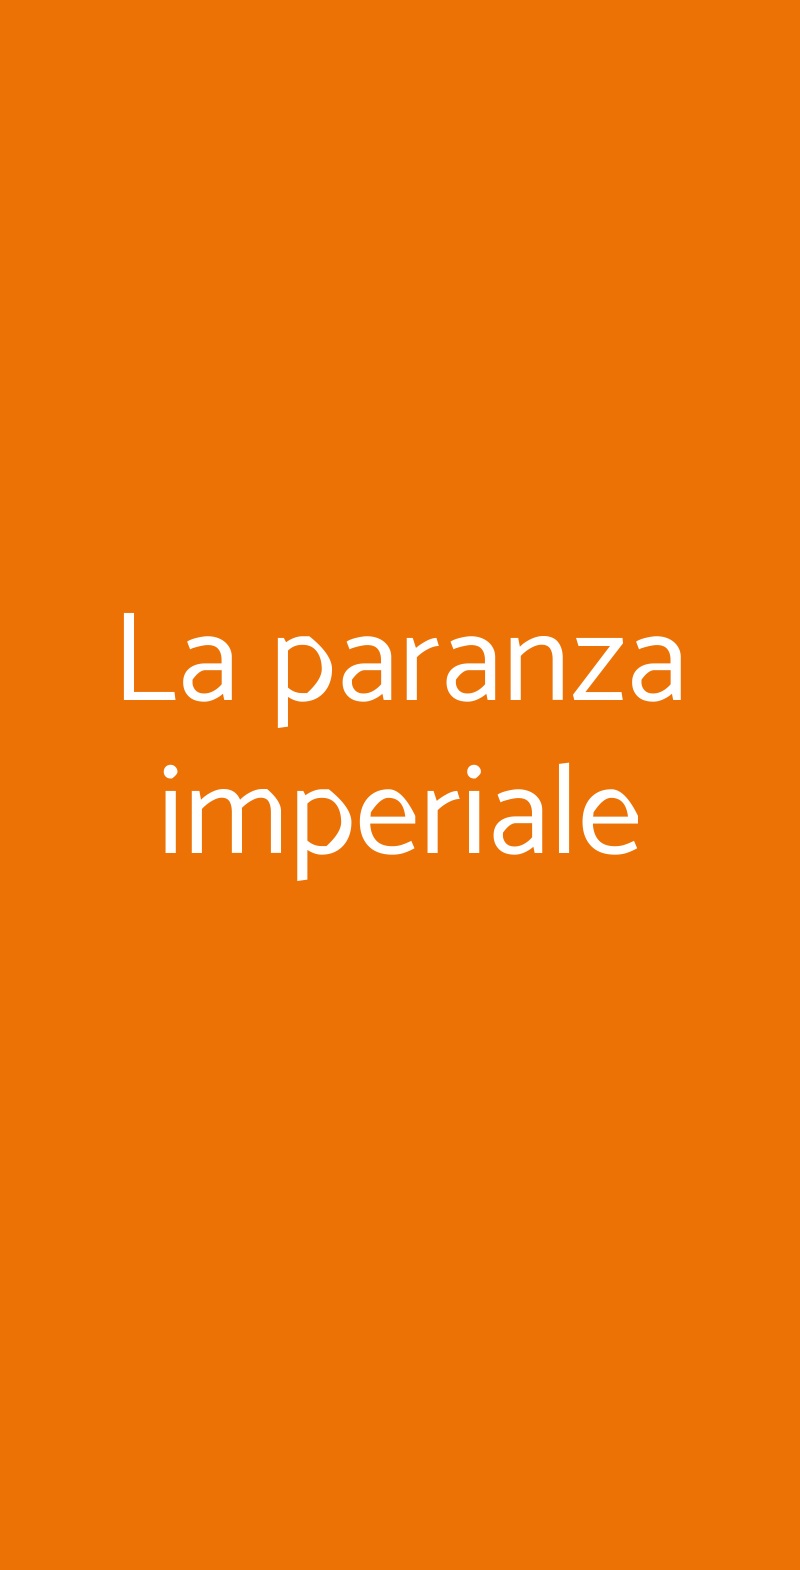 La paranza imperiale Milano menù 1 pagina